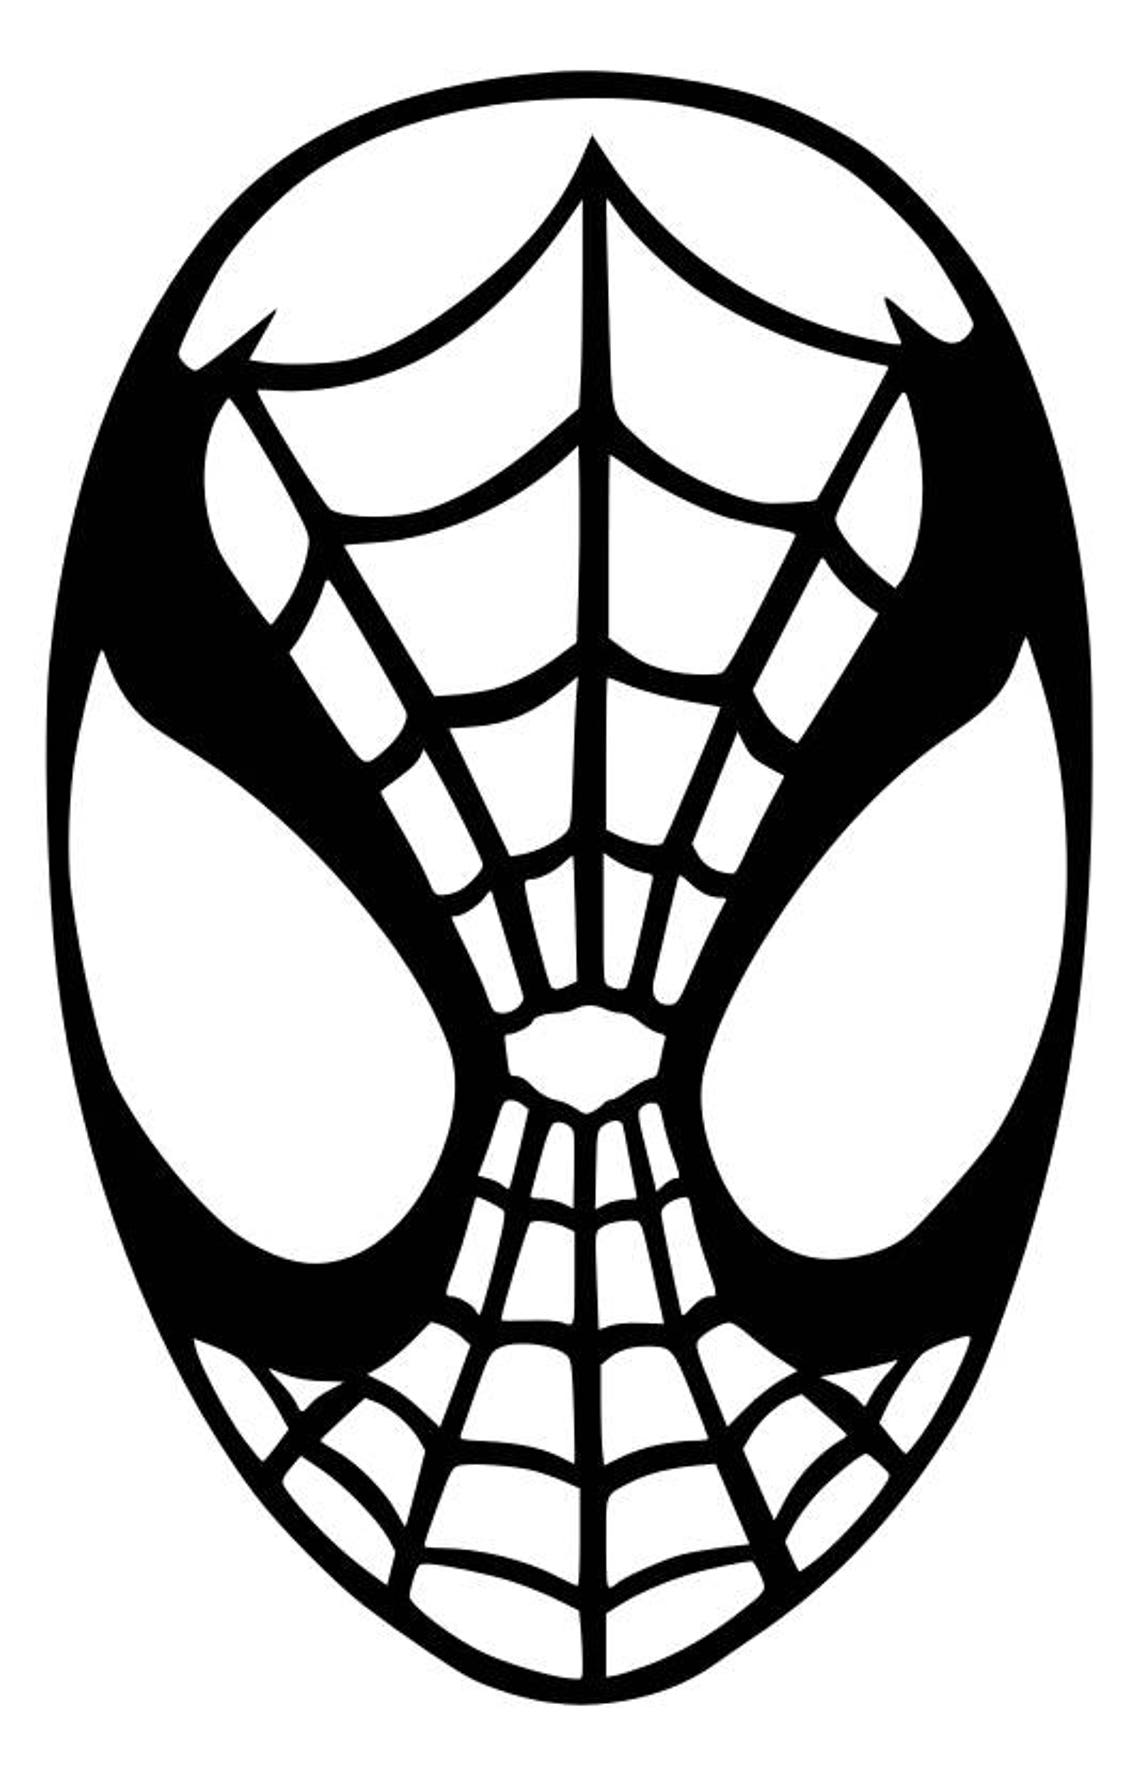 Spiderman SVG Clipart silueta inspirada por Spider Man vector | Etsy